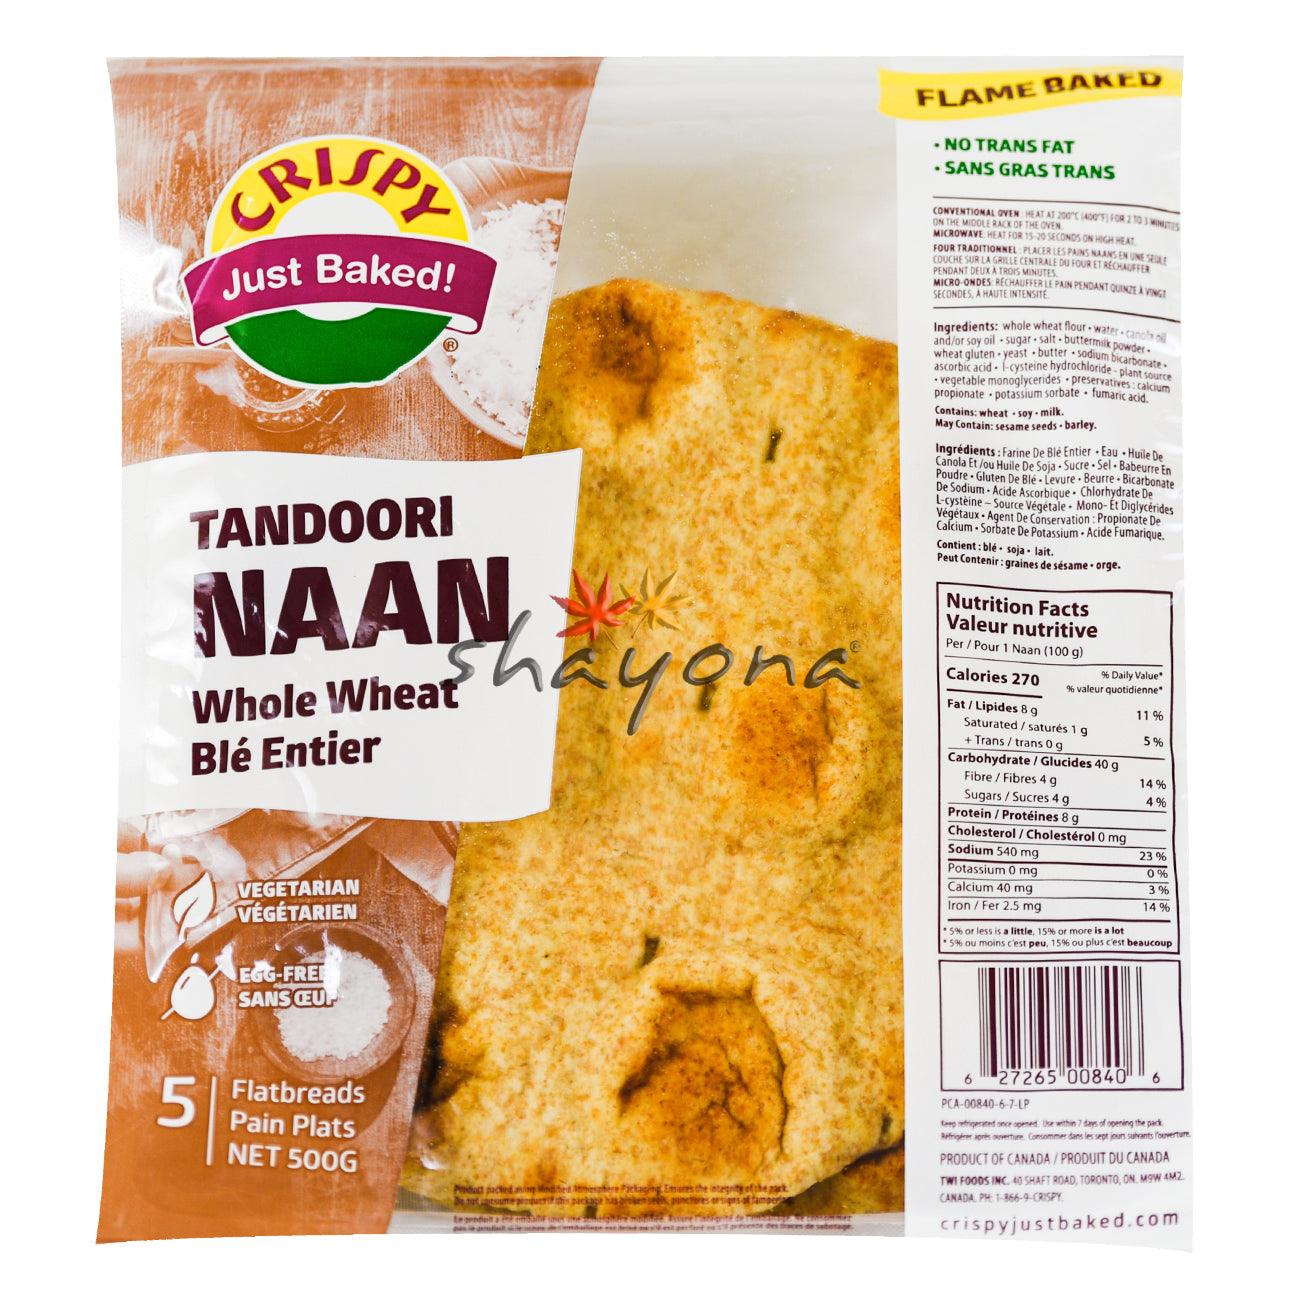 Crispy Just Baked Naan - Whole Wheat - Shayona UK